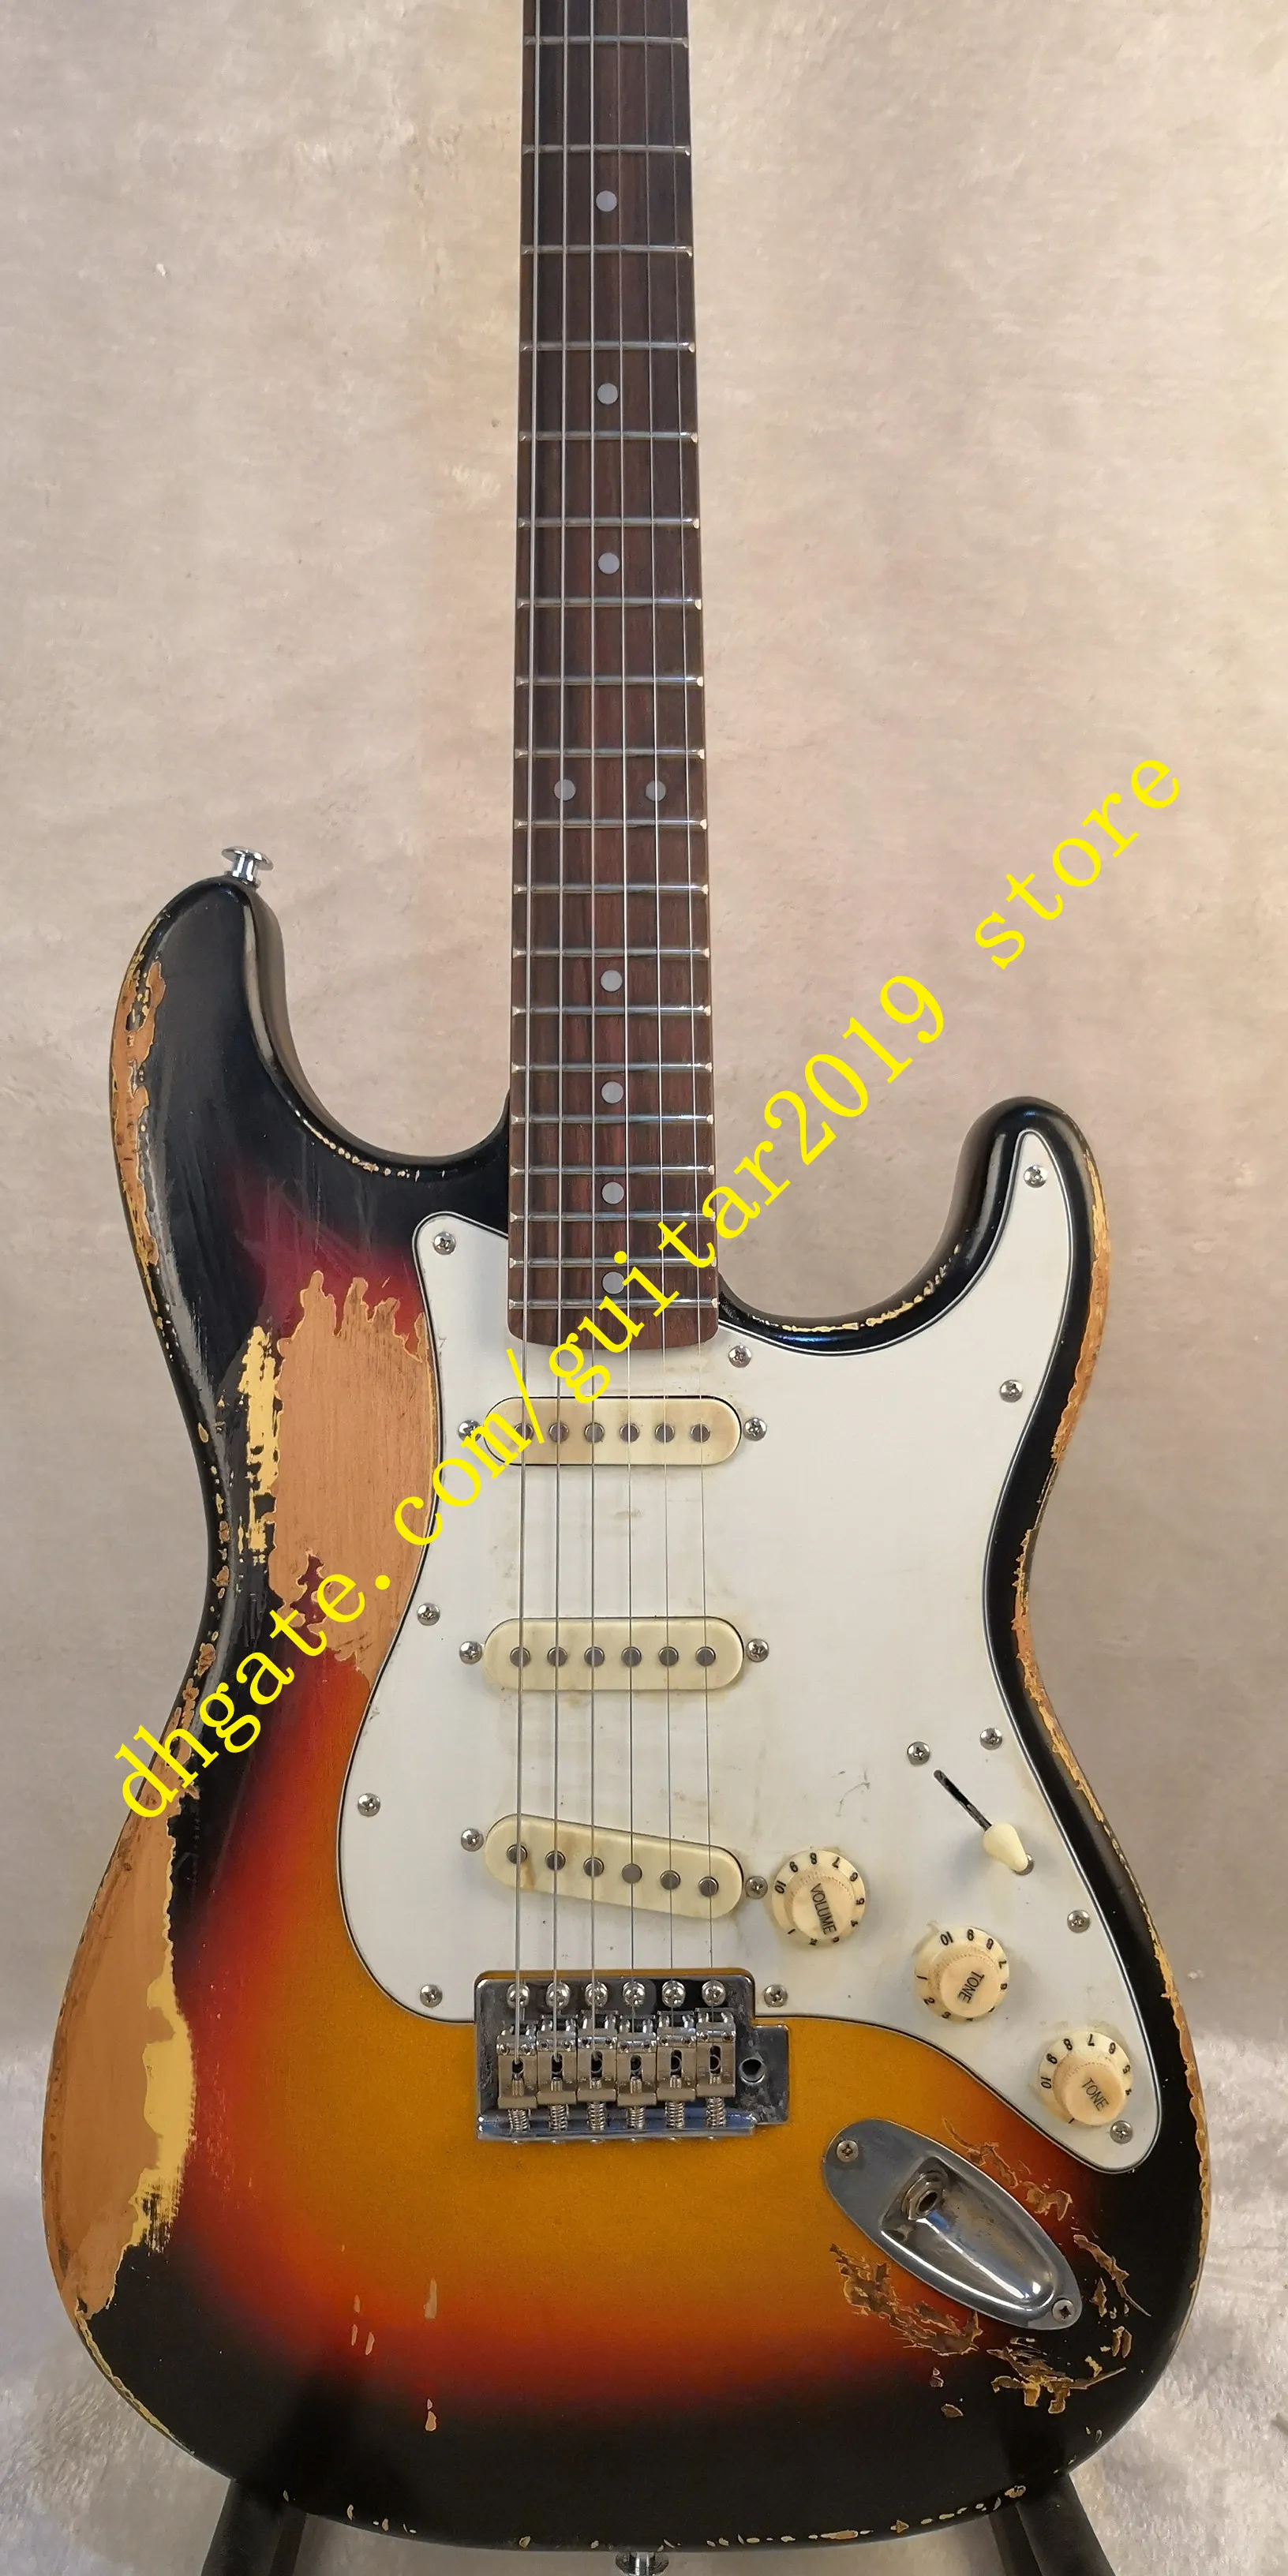 Deluxe-serien frusciante 1962 Sunburst Heavy Relic Electric Guitar I lager